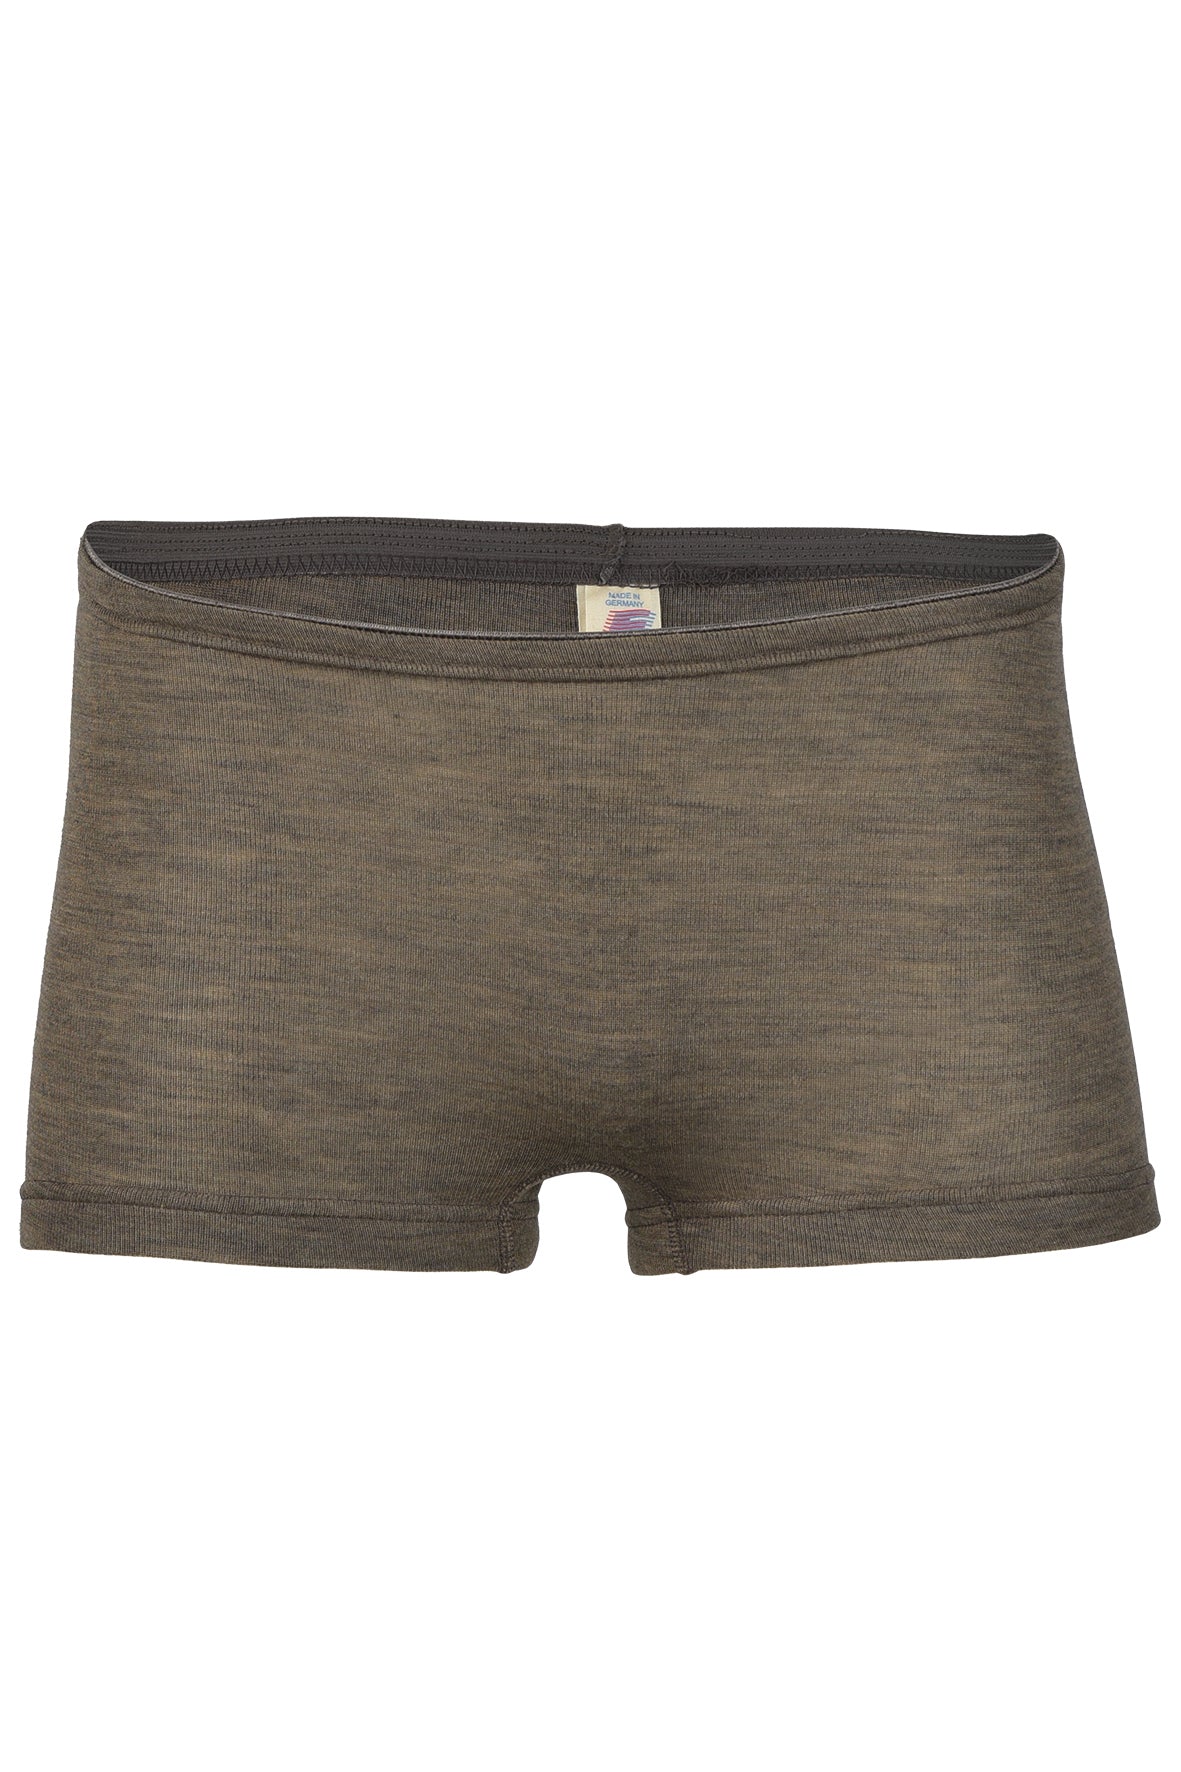 ENGEL - Women's Thermal Panties Briefs: Moisture Wicking Merino Wool Silk  with Lace Detail